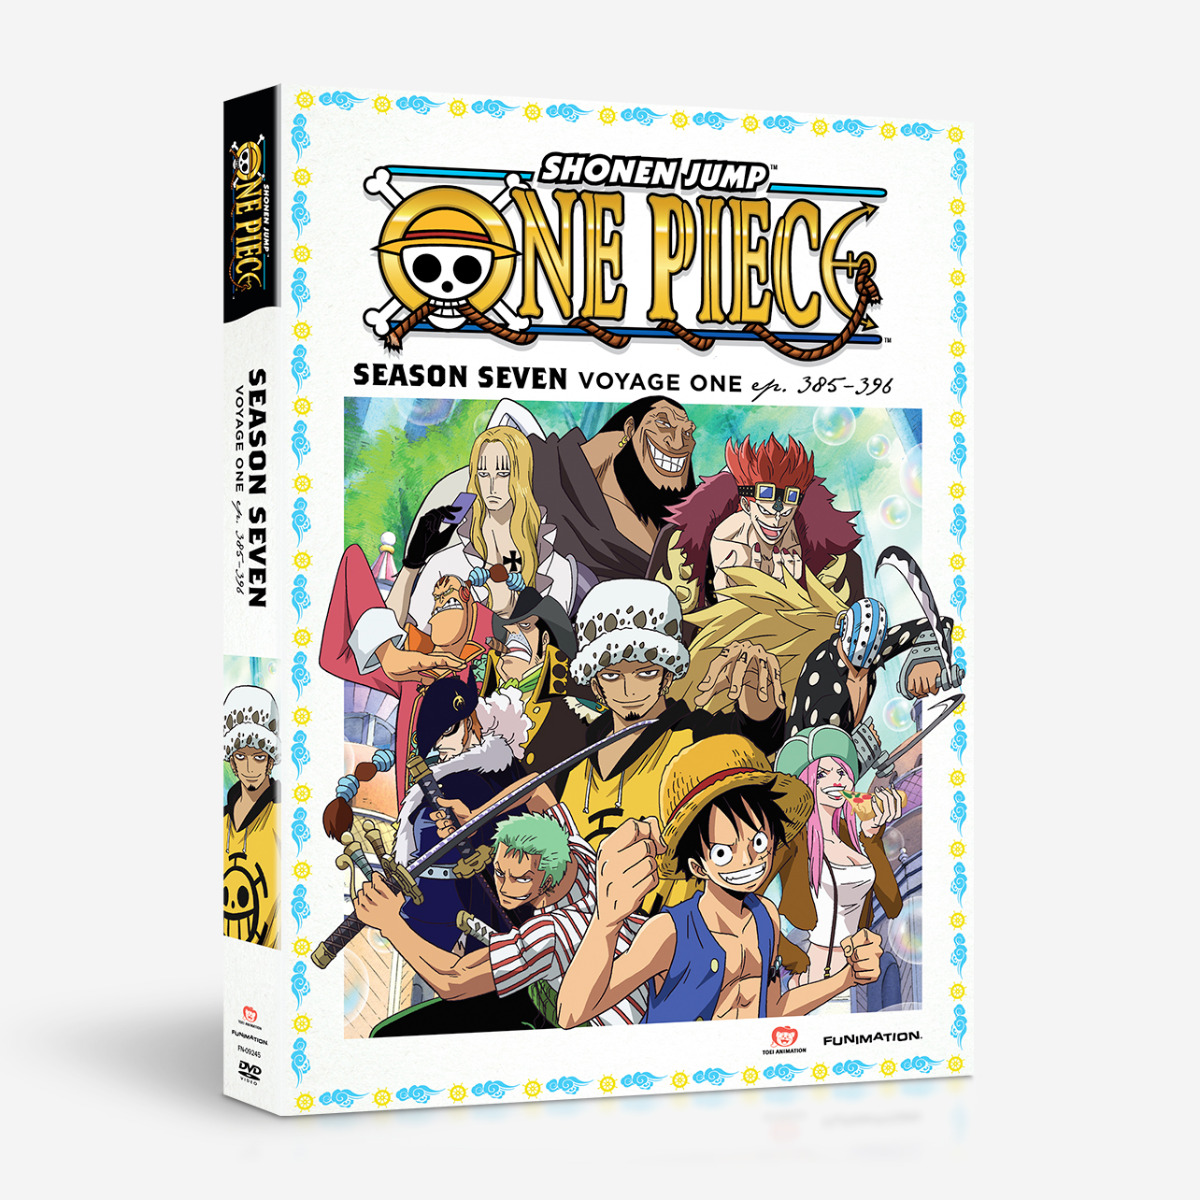 One Piece - Season 7 - Voyage 1 - DVD image count 0